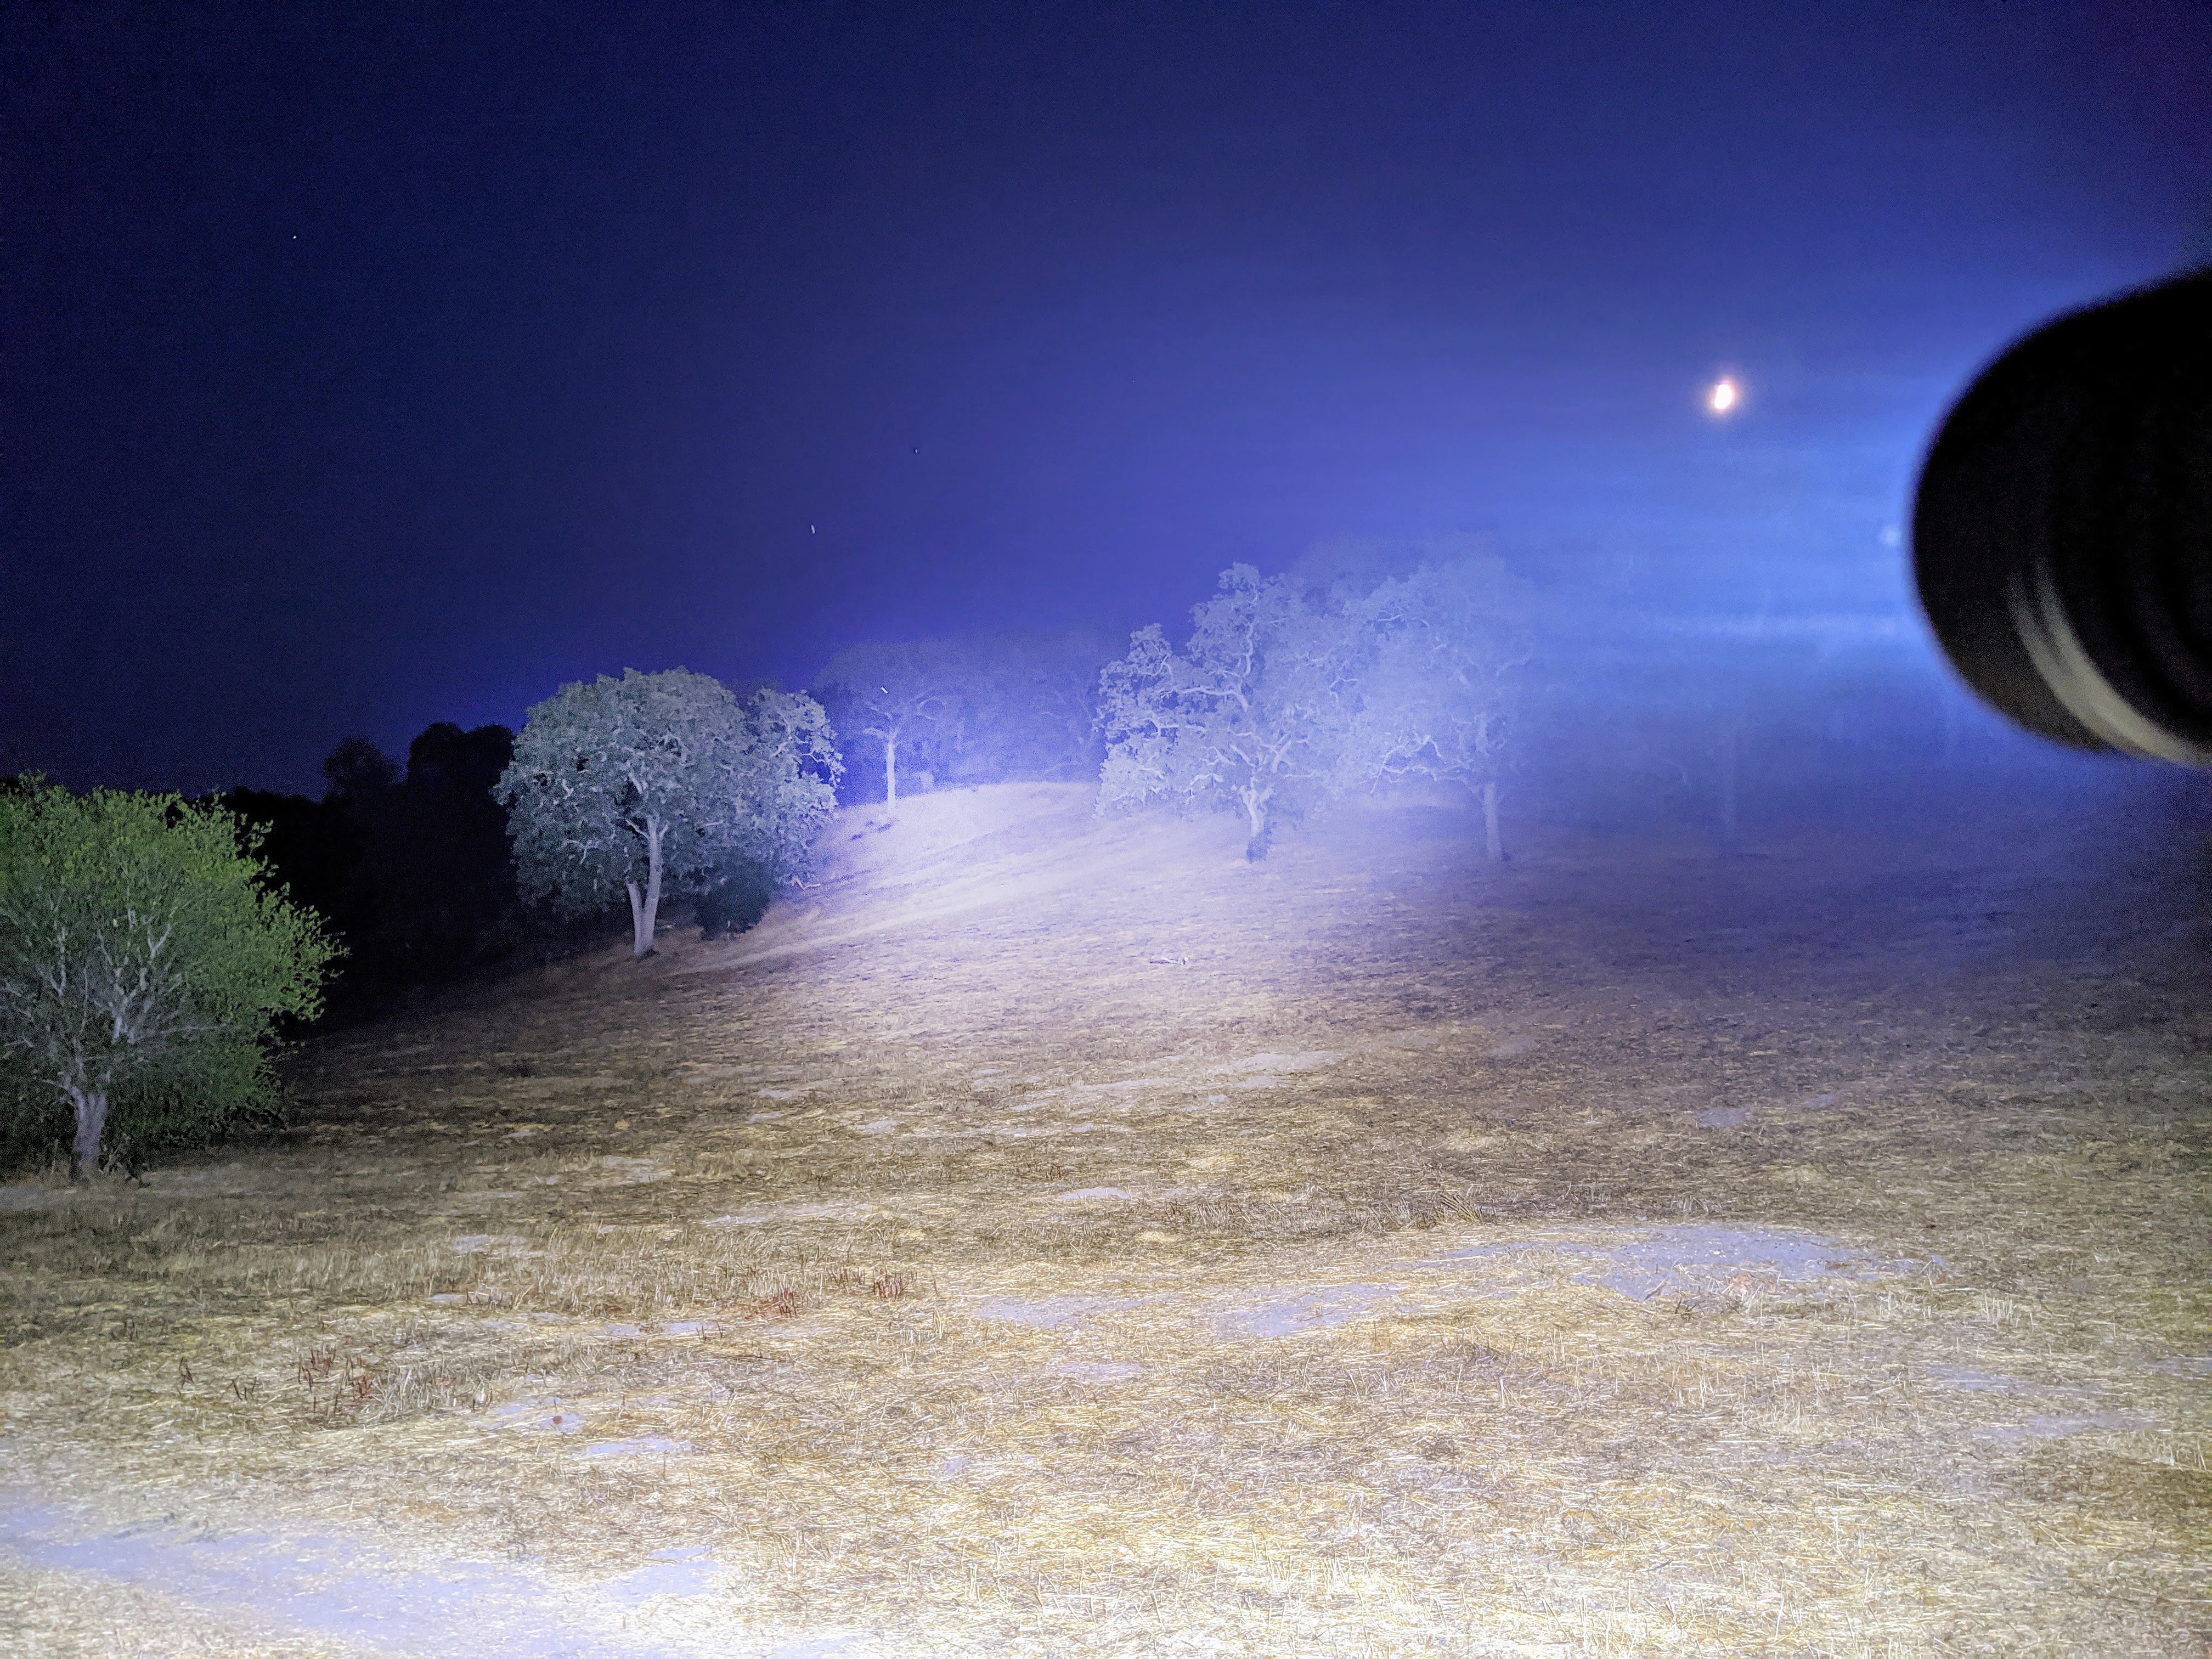 Wuben Lightok X2 EDC Flashlight 2500 Lumens – CountyComm